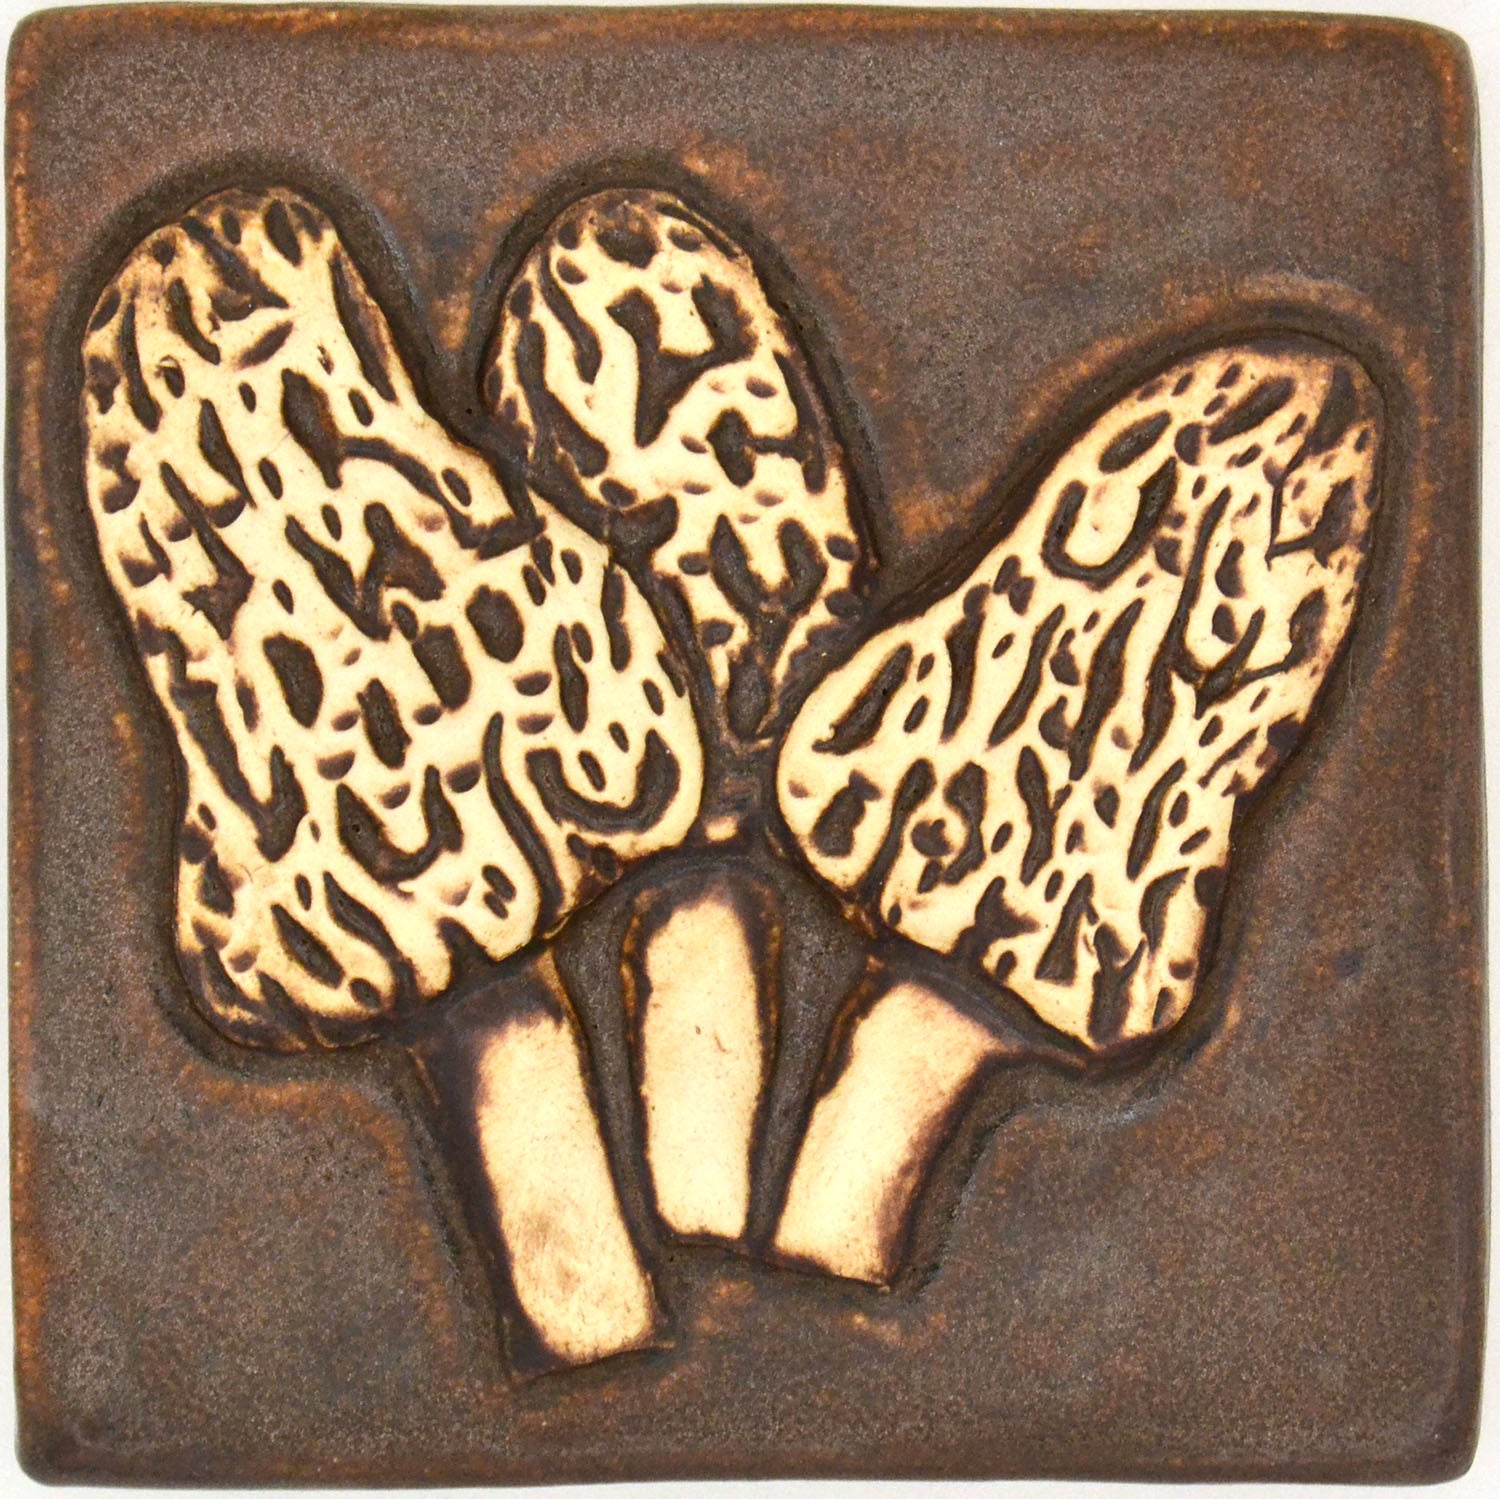 4x4 morel mushroom tile in brown